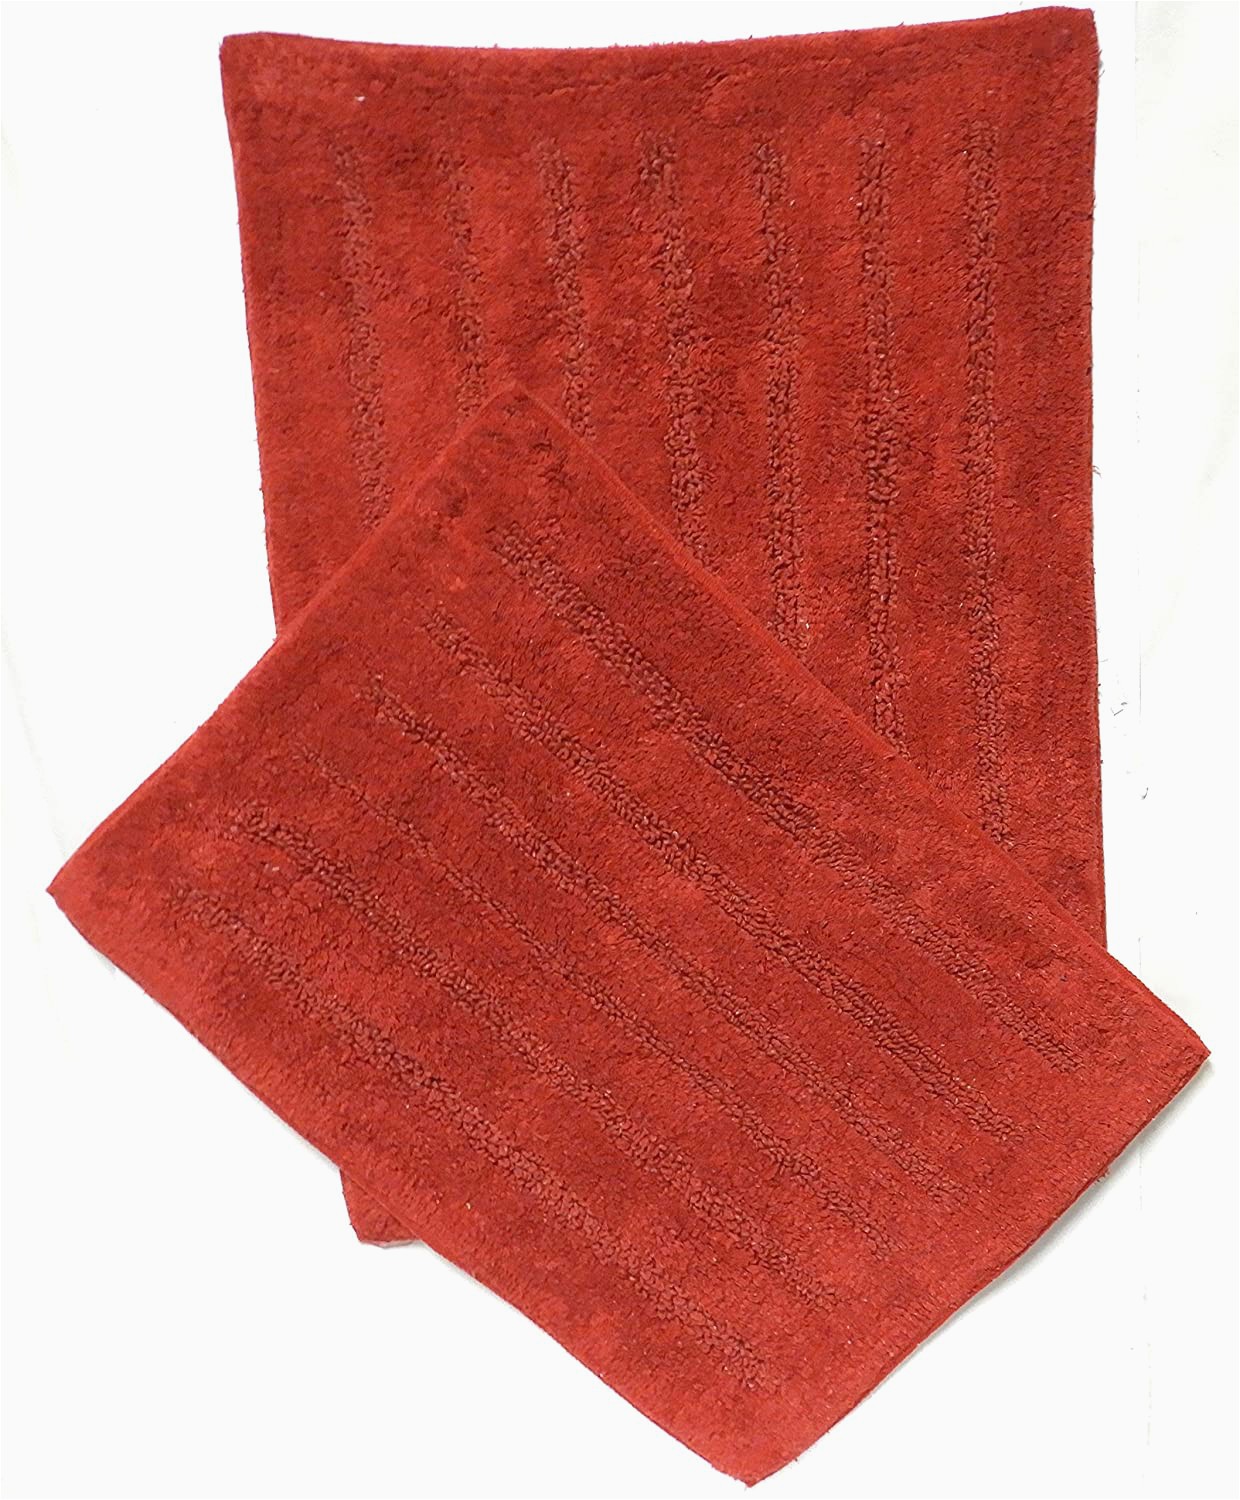 Deep Red Bathroom Rugs Buy 2 Piece Cotton Bath Rug Set Bathroom Mat Ultra